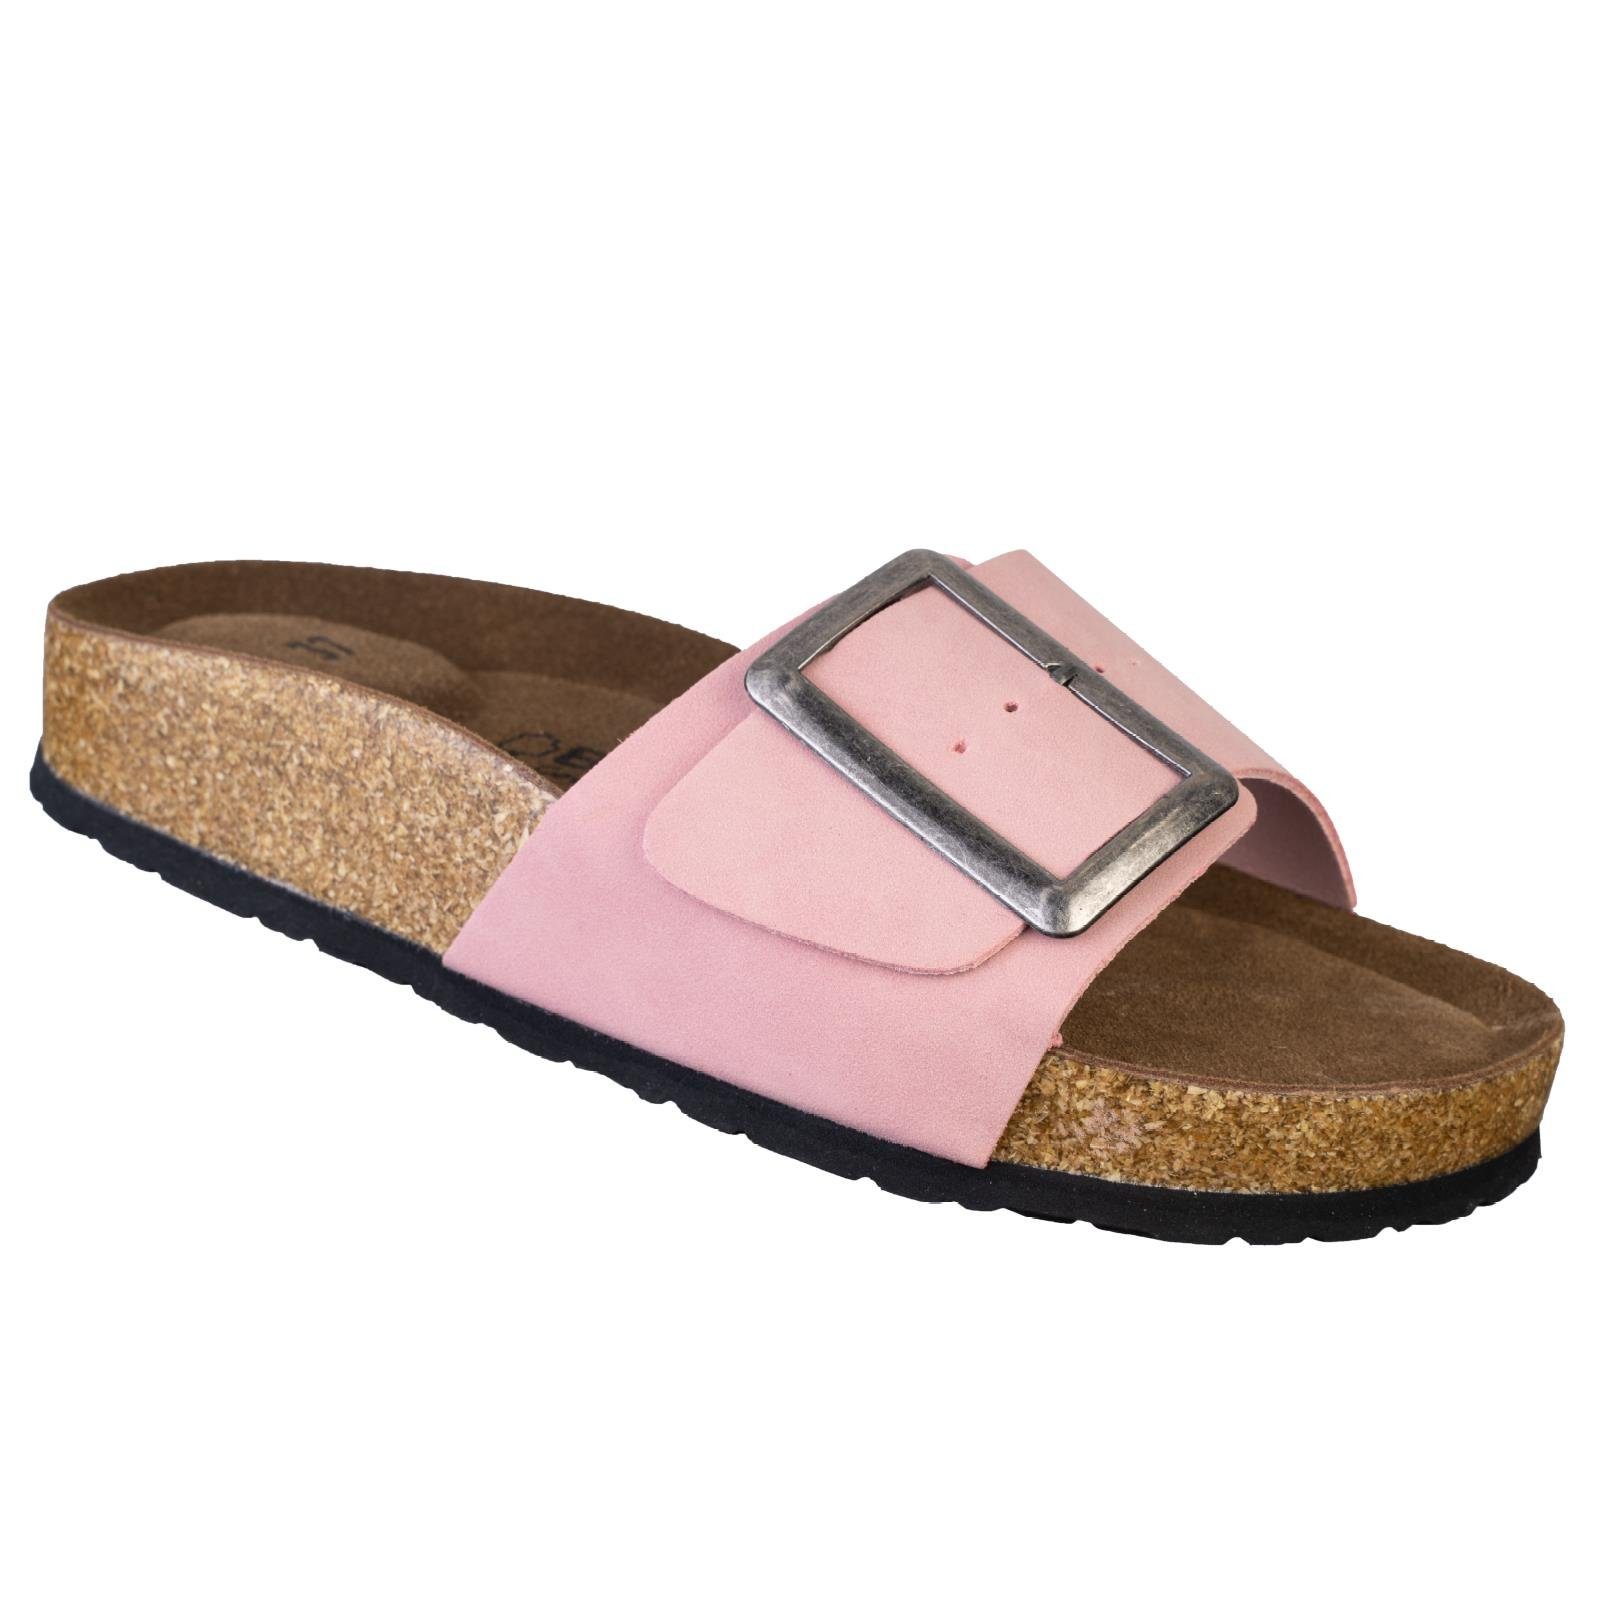 Größe Easy - & Damen Sandalen Optik Leder Hurdy 37 Rose Biosoft 43 Walk Biosoft Flache Sandale Comfort Sommer